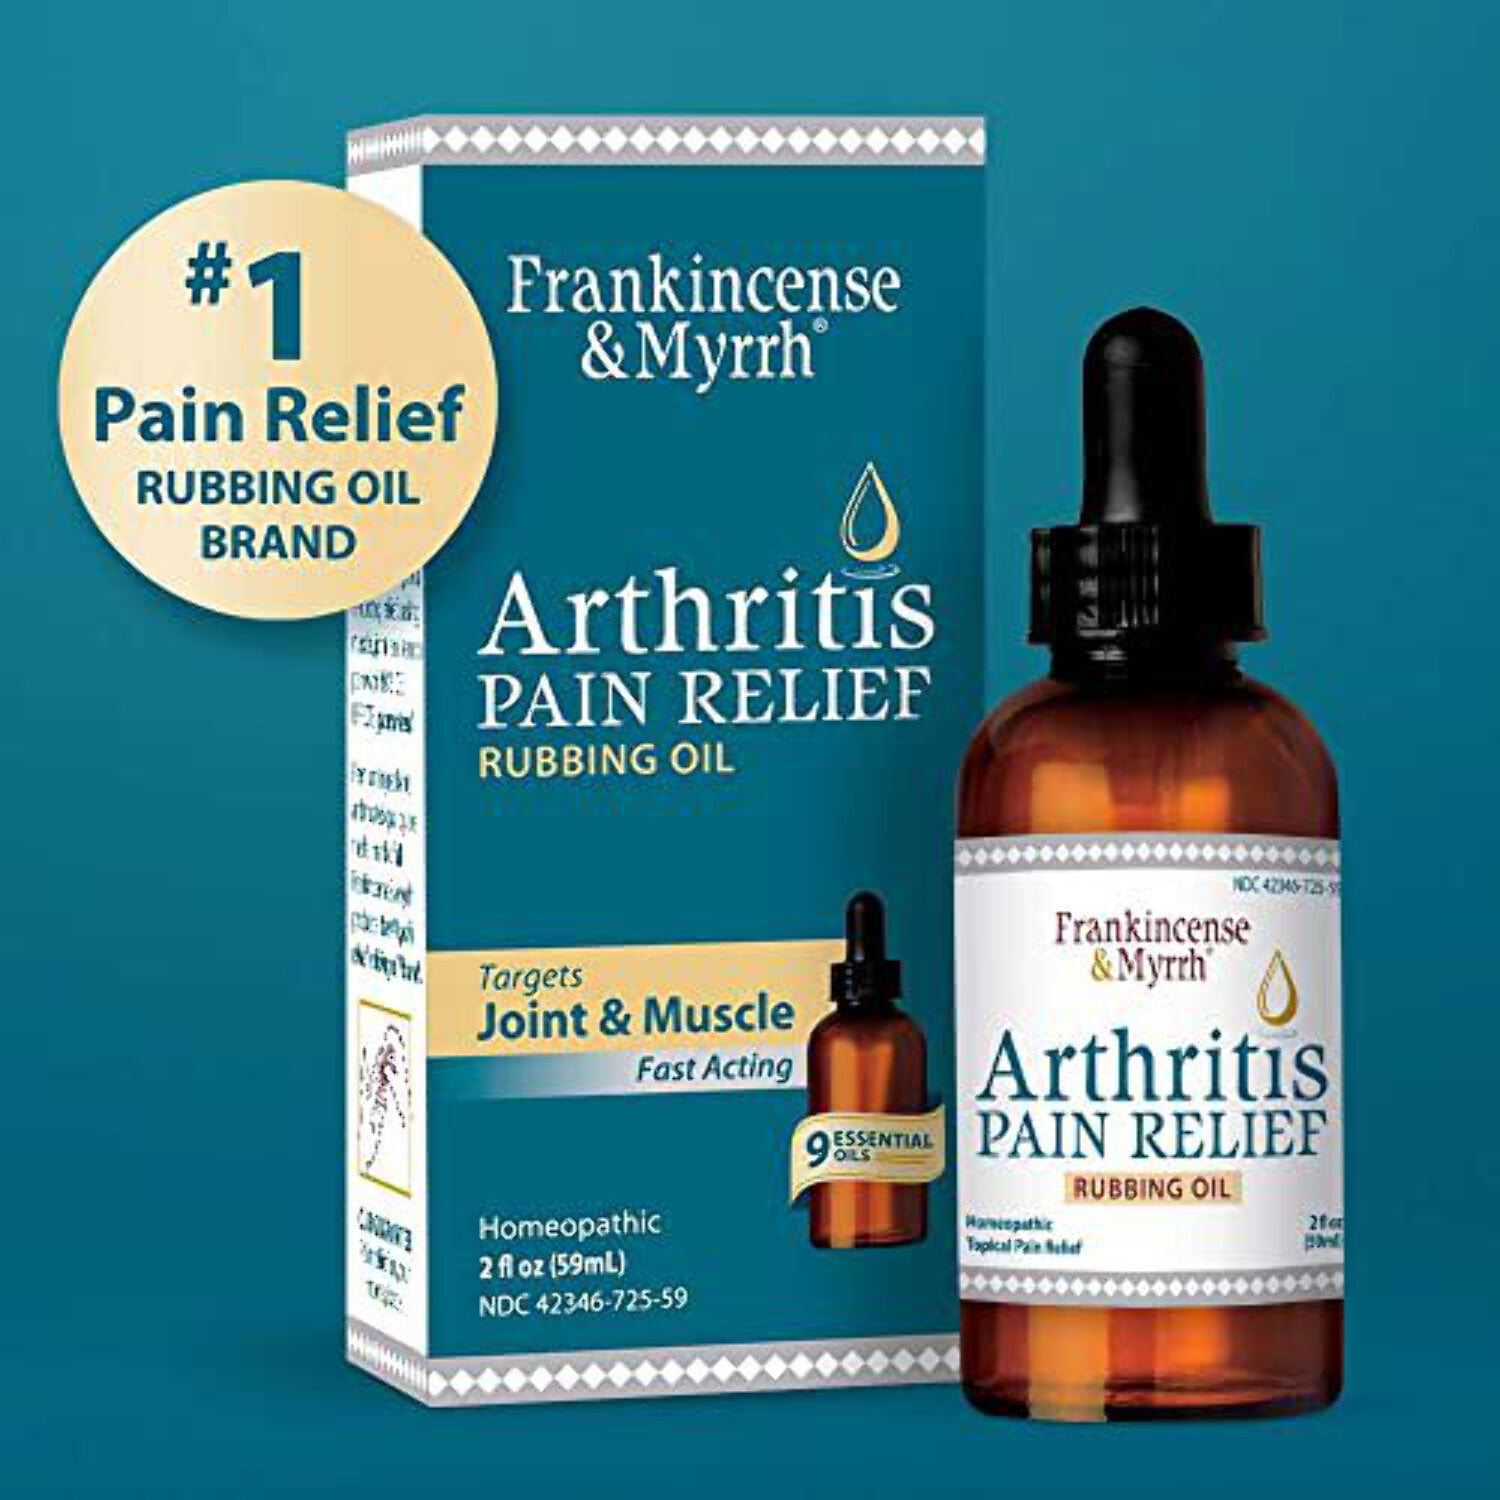 FRANKINCENSE & MYRRH Arthritis Pain Relief Rubbing Oil – Pain